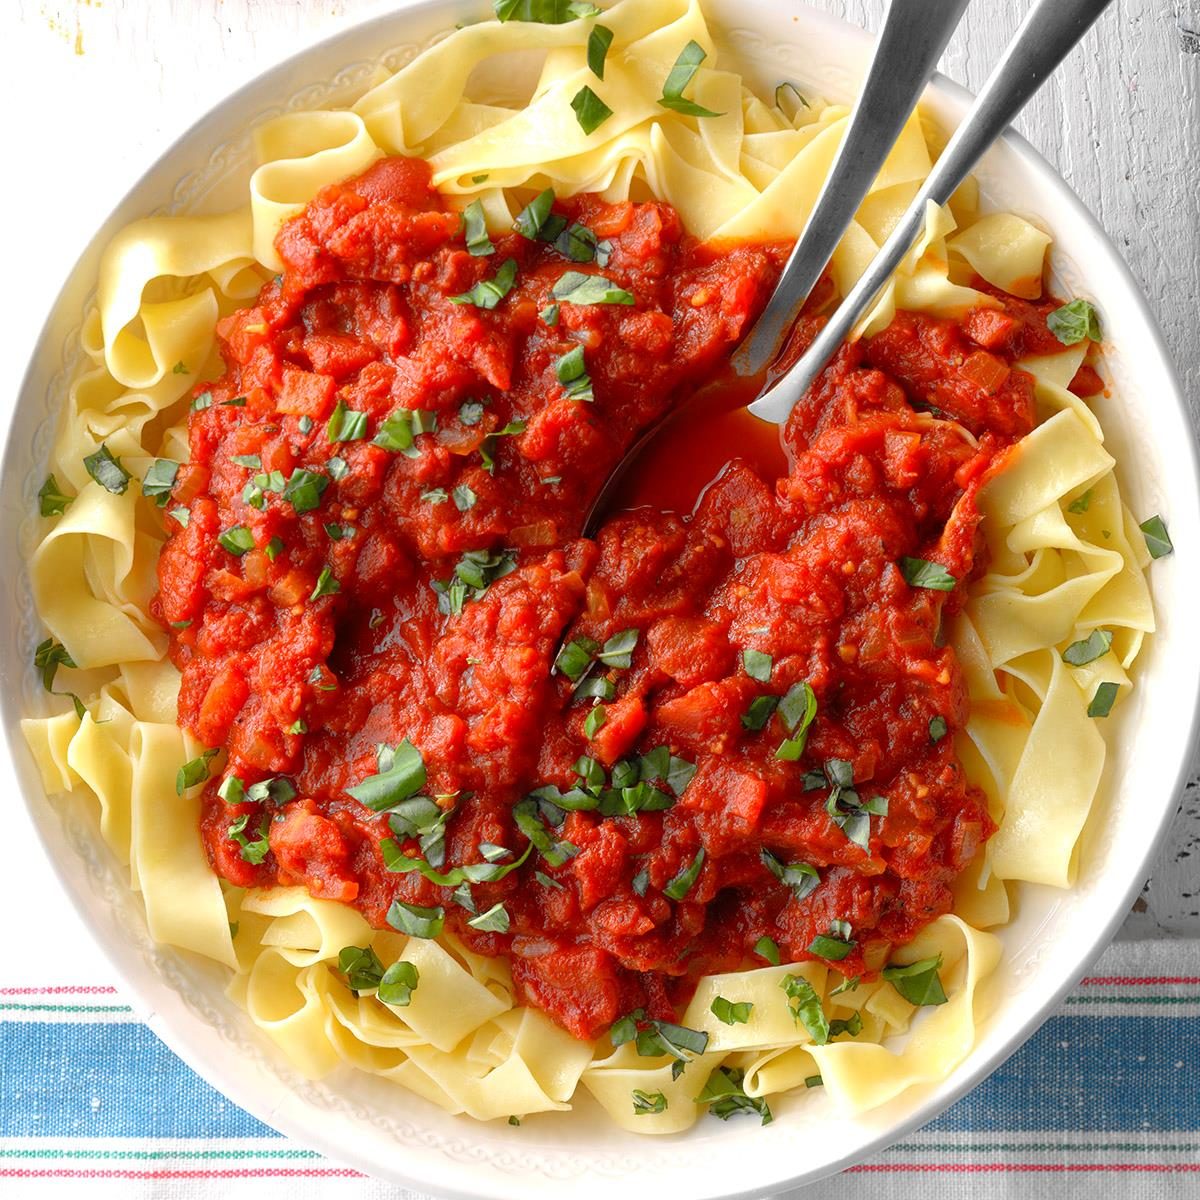 Homemade Meatless Spaghetti Sauce Recipe How To Make It